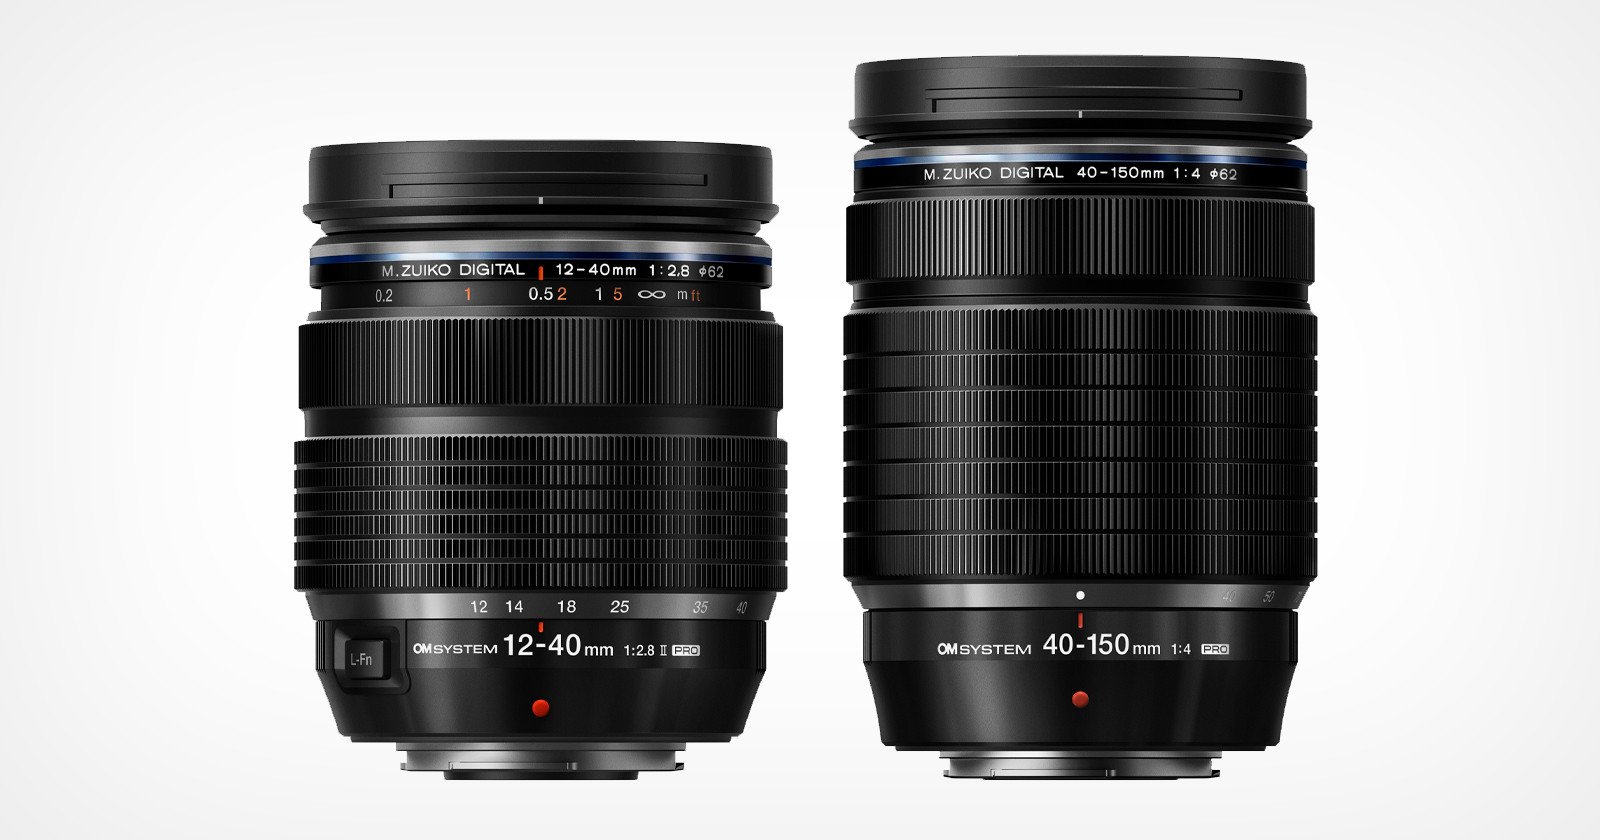 OM Digital Launches Two IP53 Lenses: 12-40mm f/2.8 II, 40-150mm f/4.0